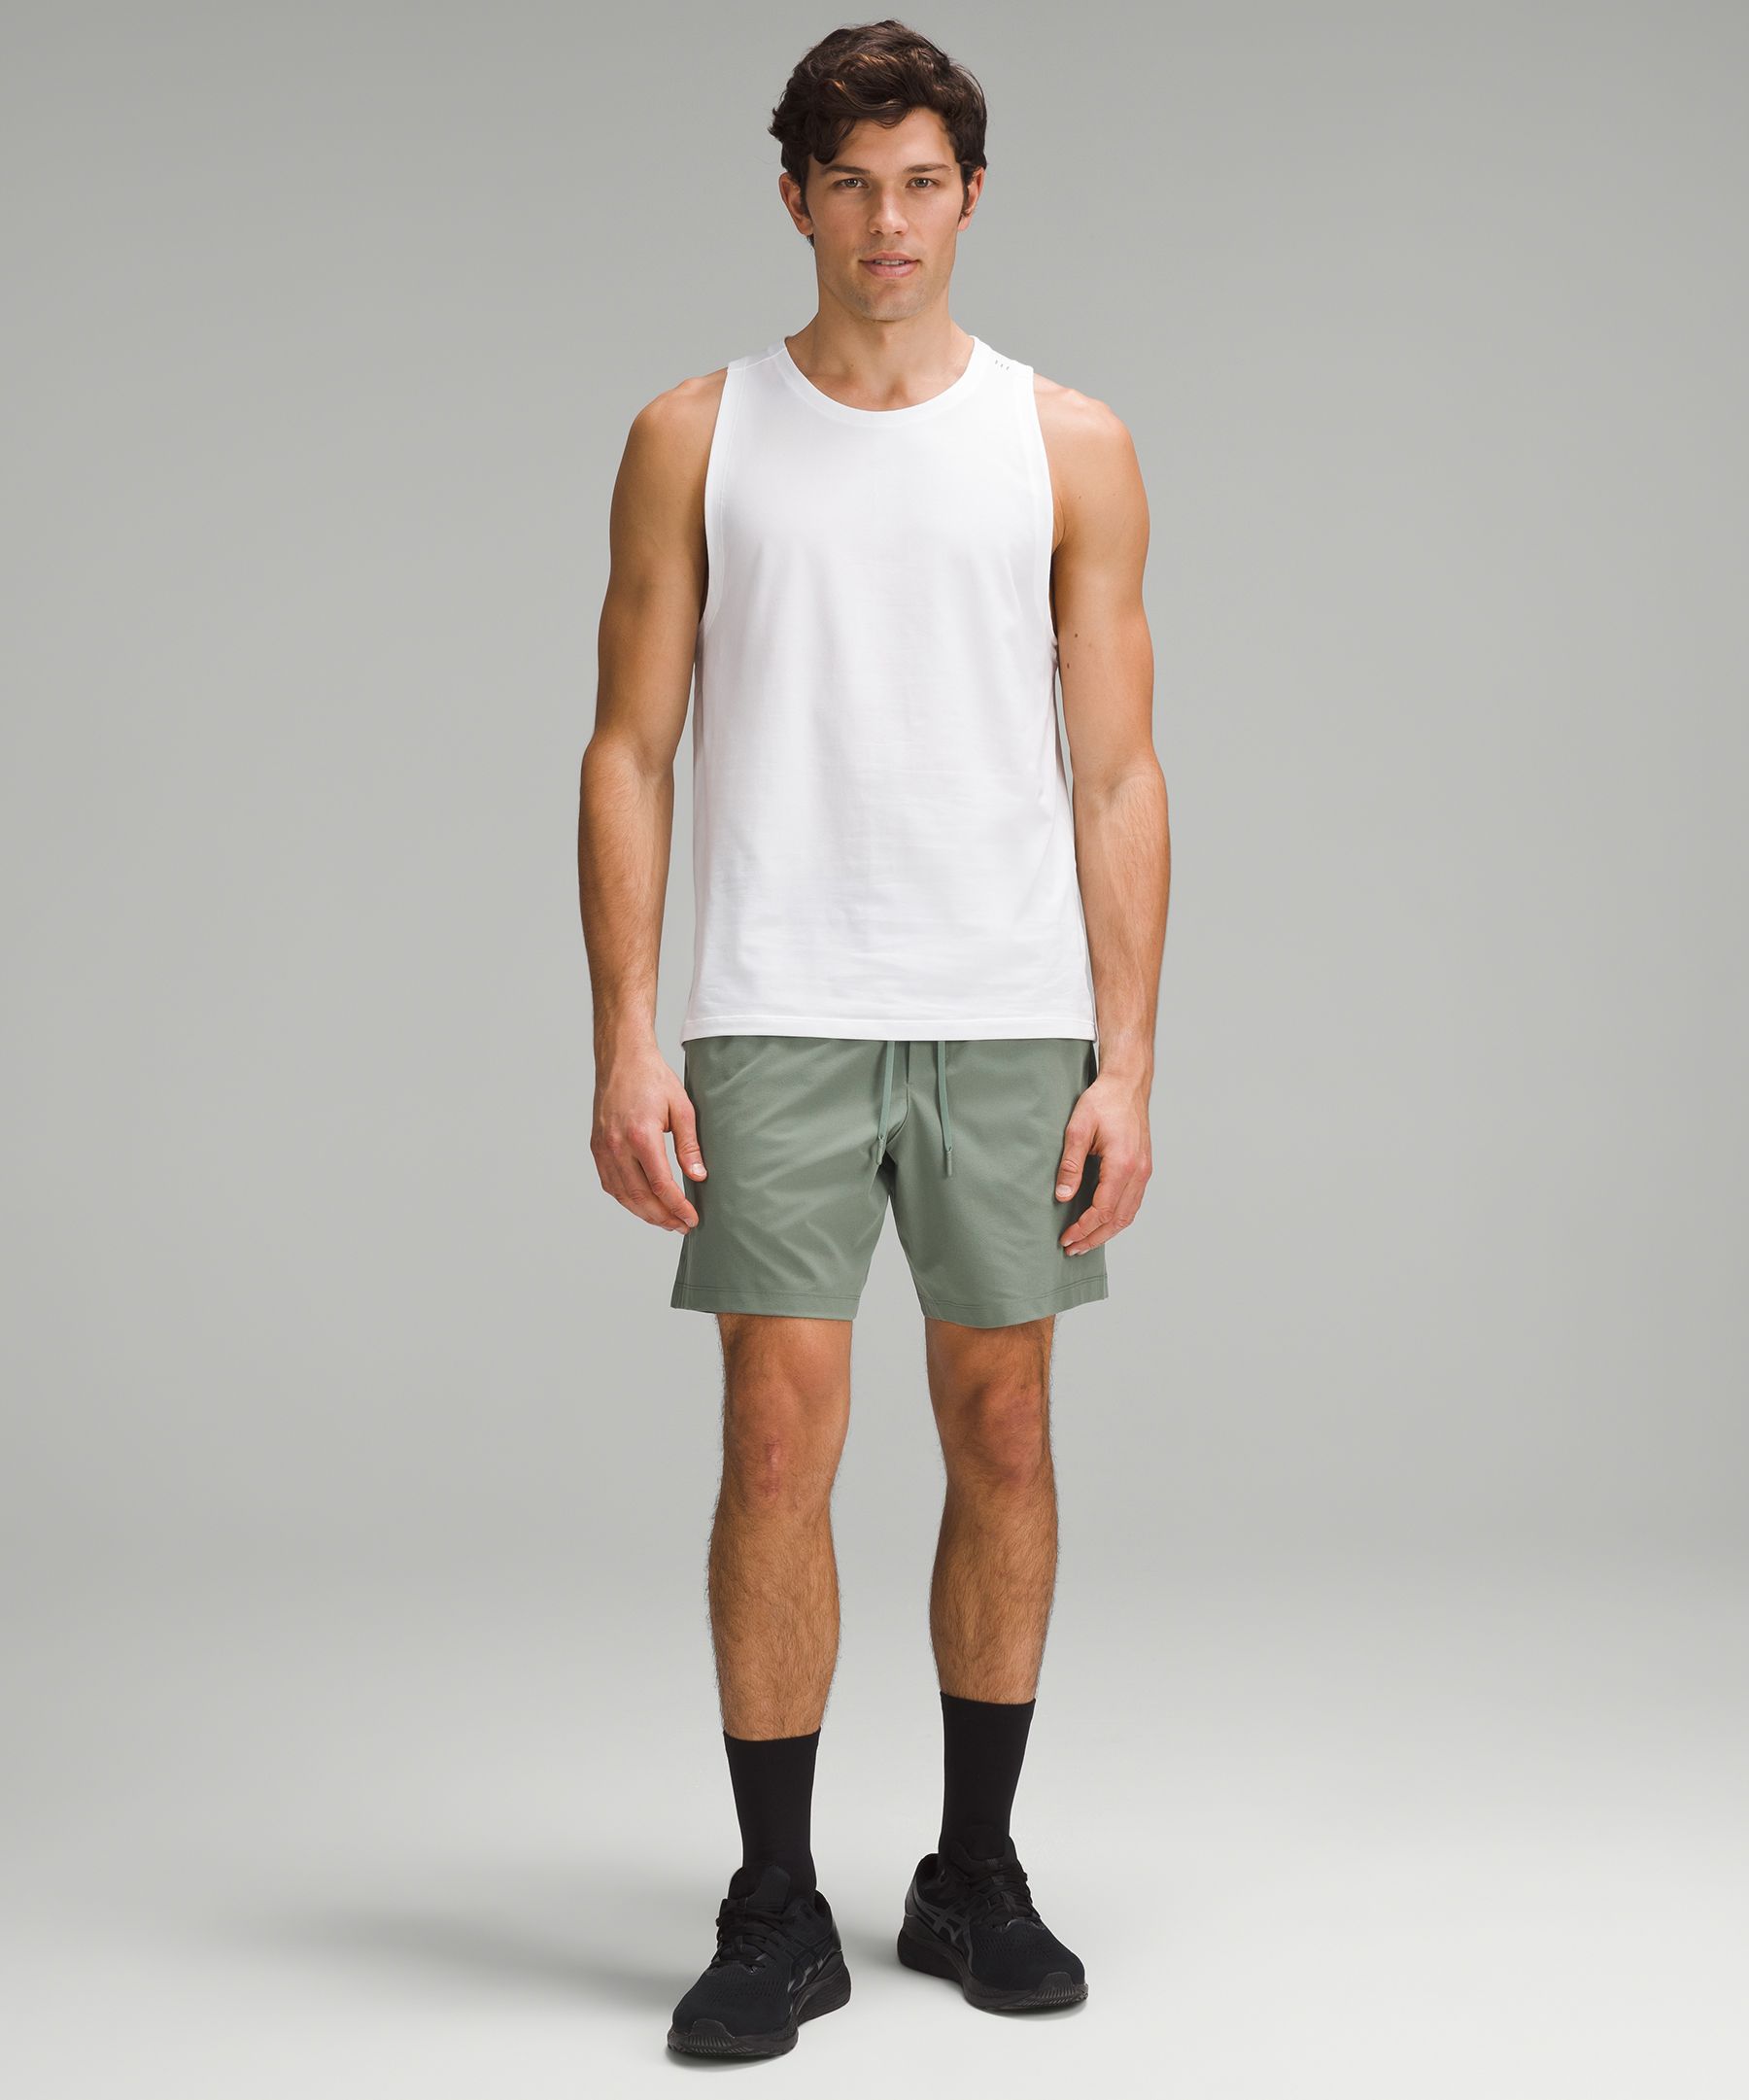 Lululemon Athletica Men's Shorts Olive Green Size 32 CA 35801 RN 106259